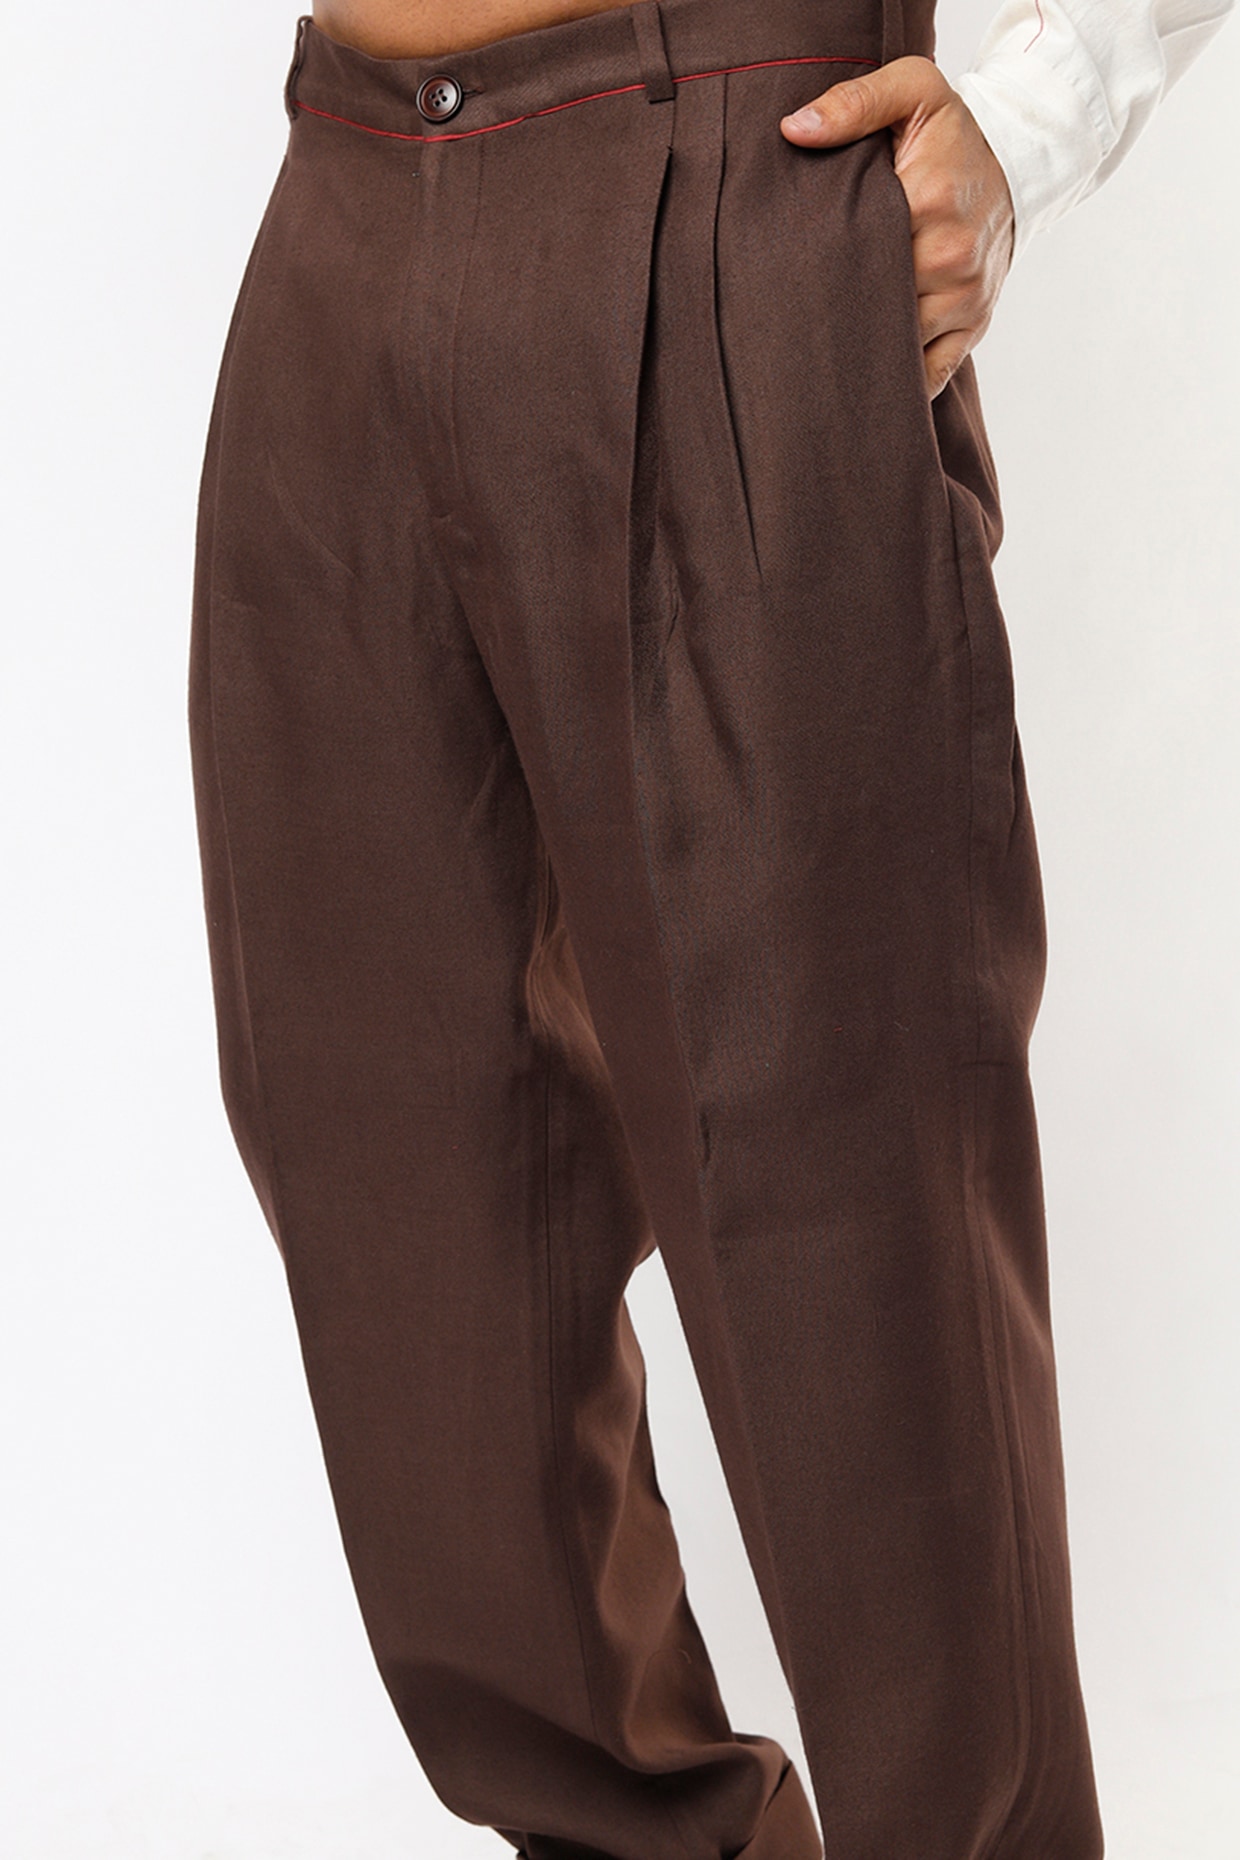 Plain Mens Dark Sky Cotton Twill Trouser, Size: 28-36 at Rs 410 in New Delhi